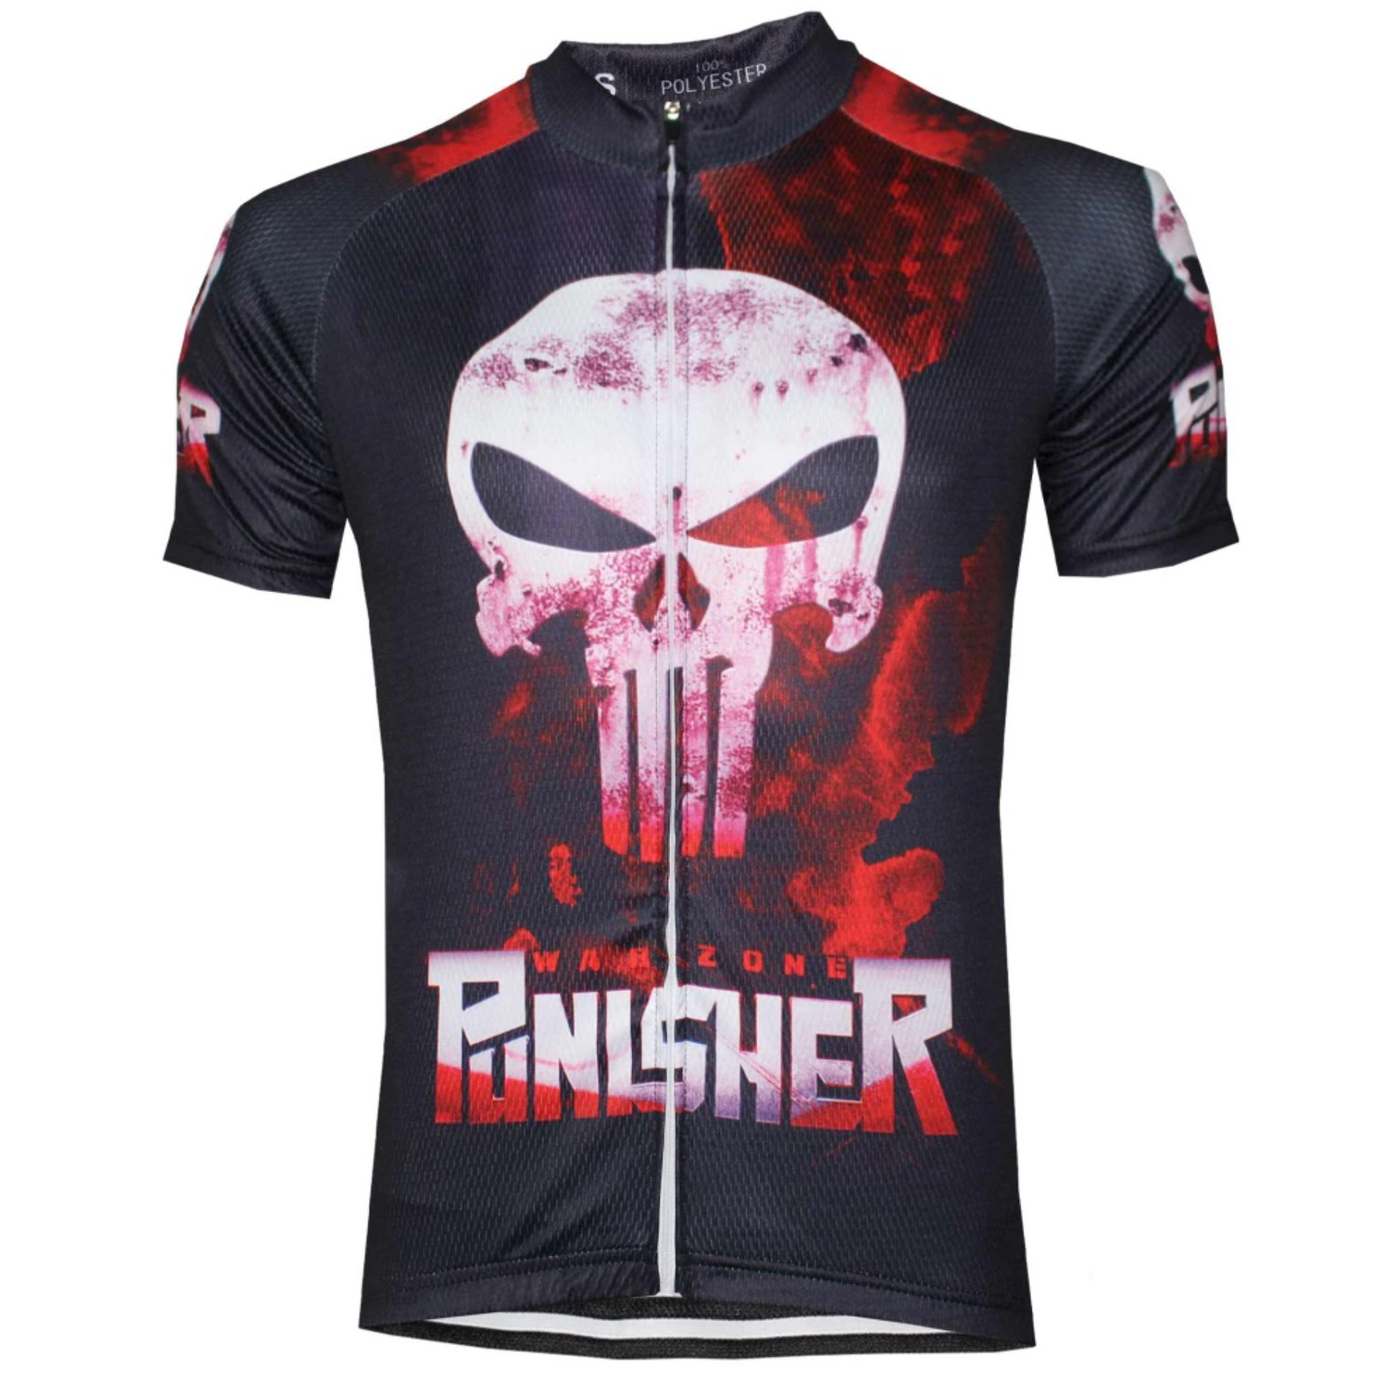 Punisher Short Sleeve Jersey